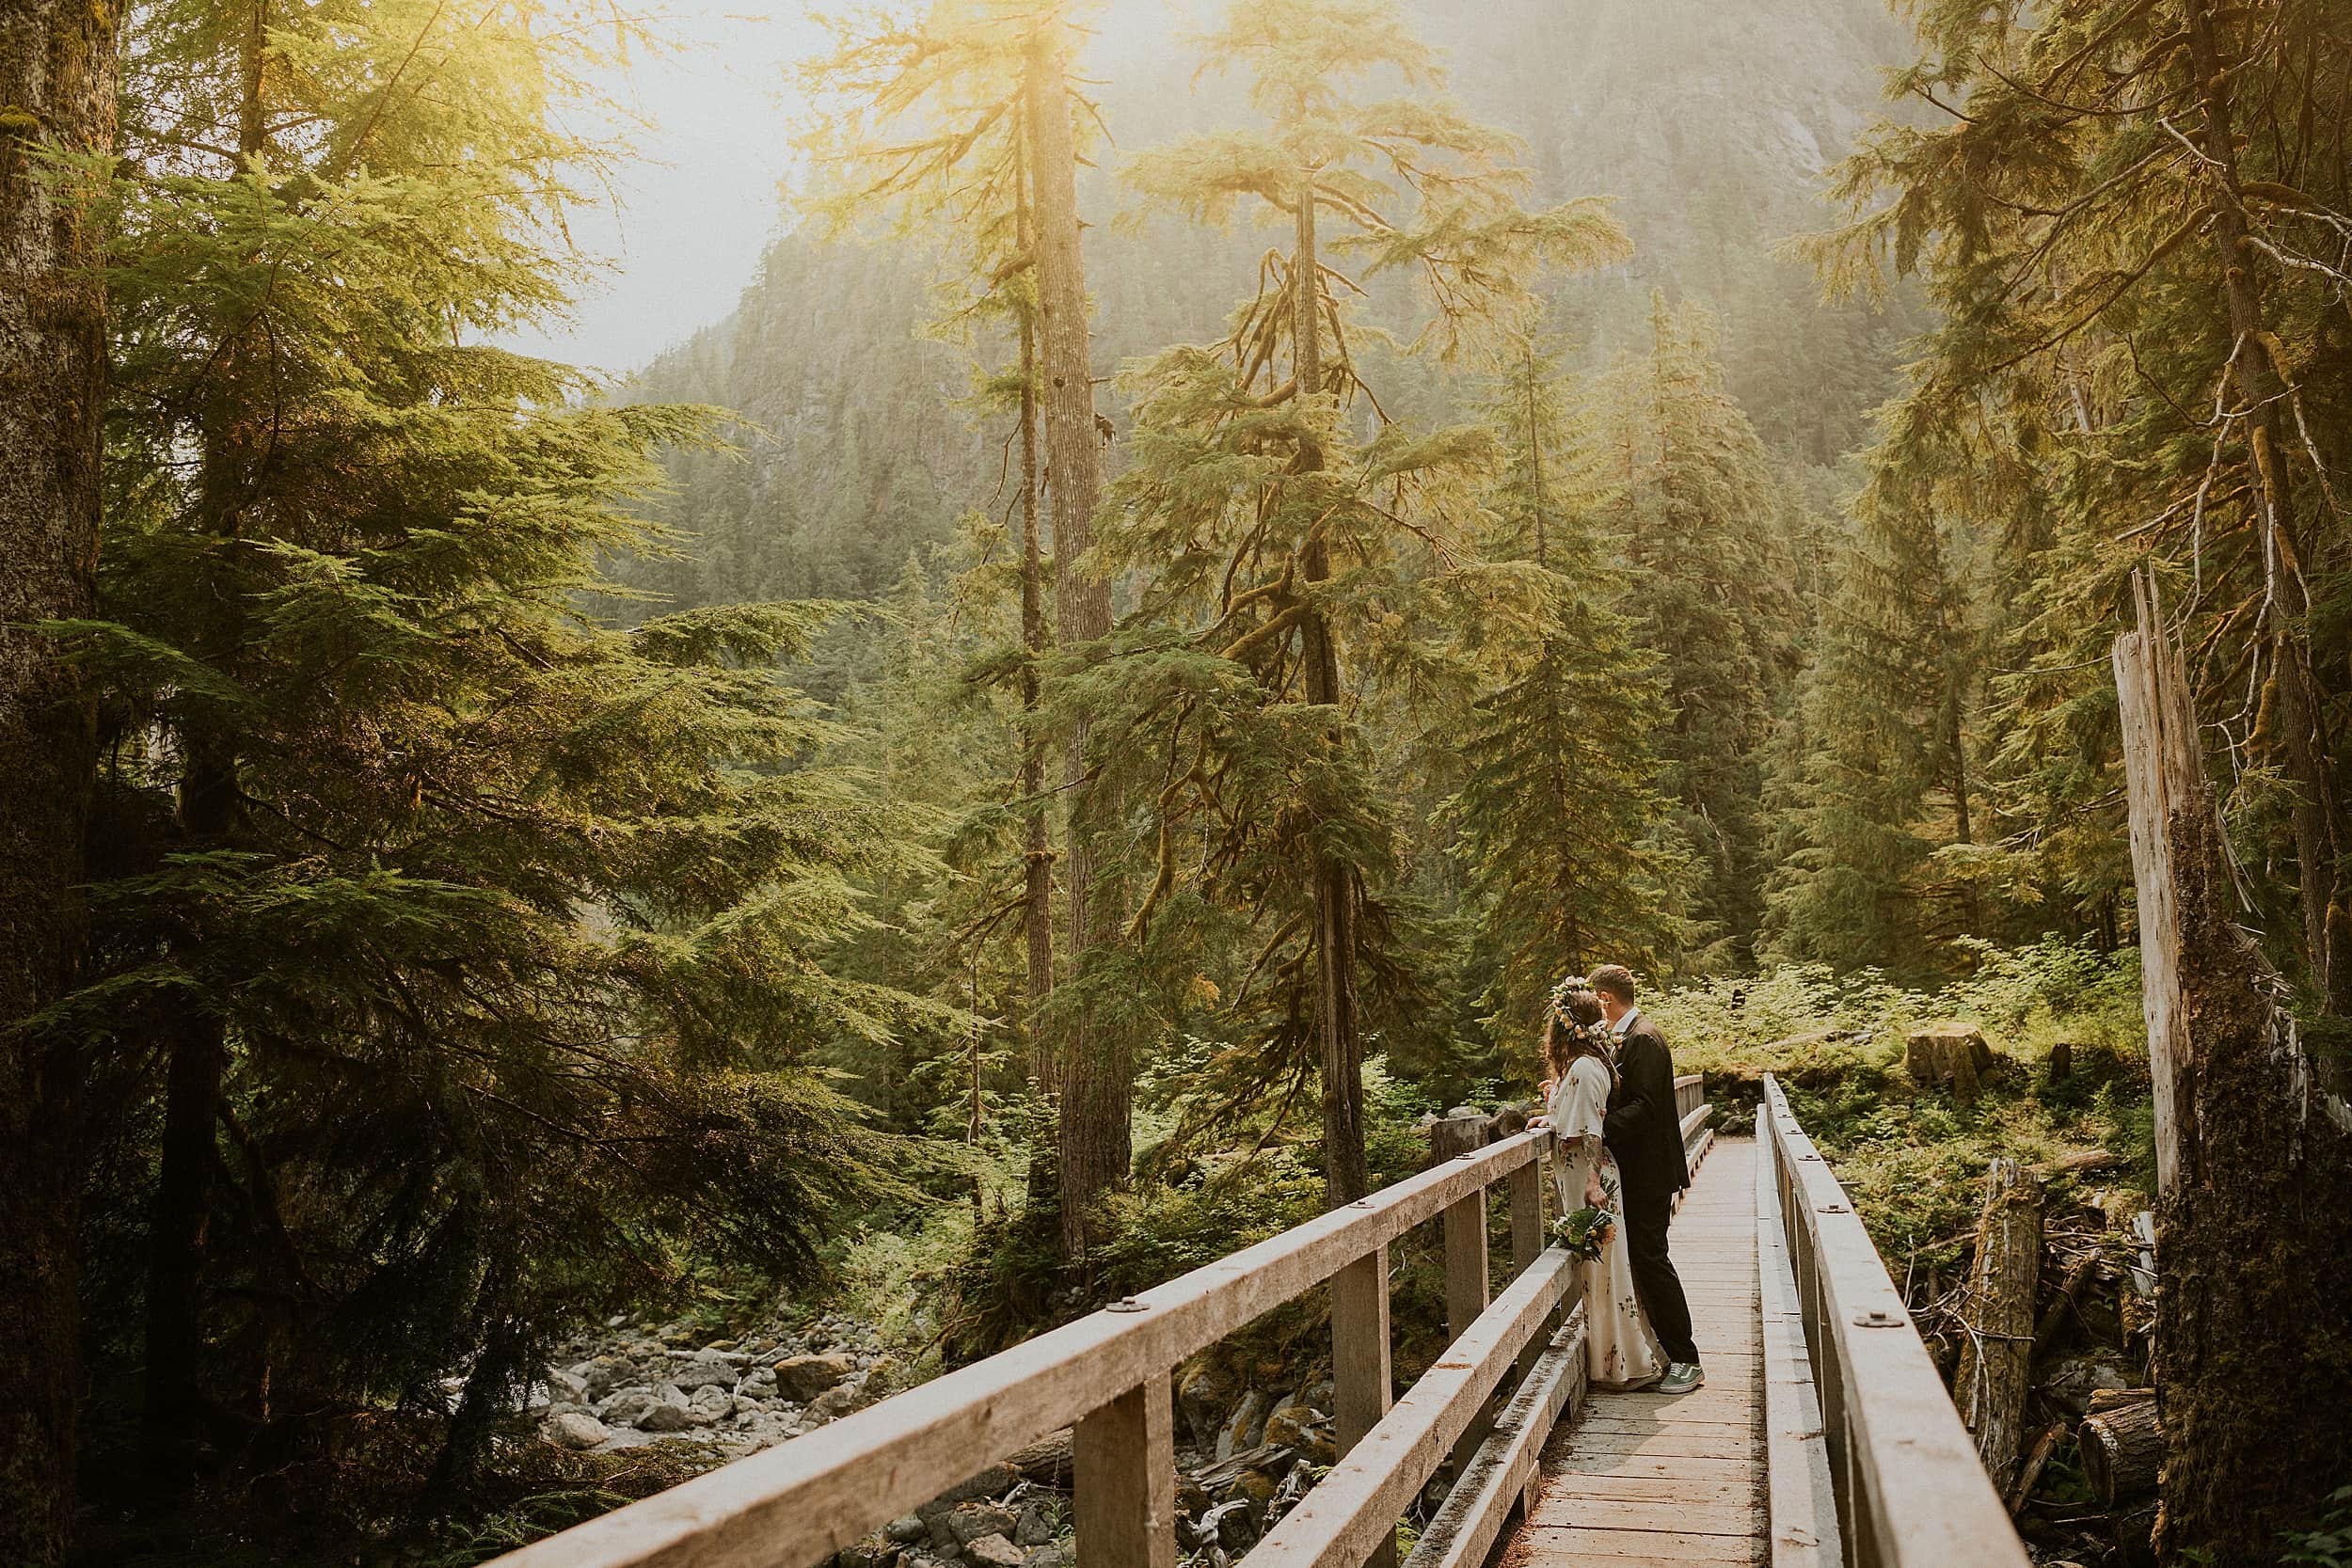 bride and groom on bridge mount hood wilderness landscape